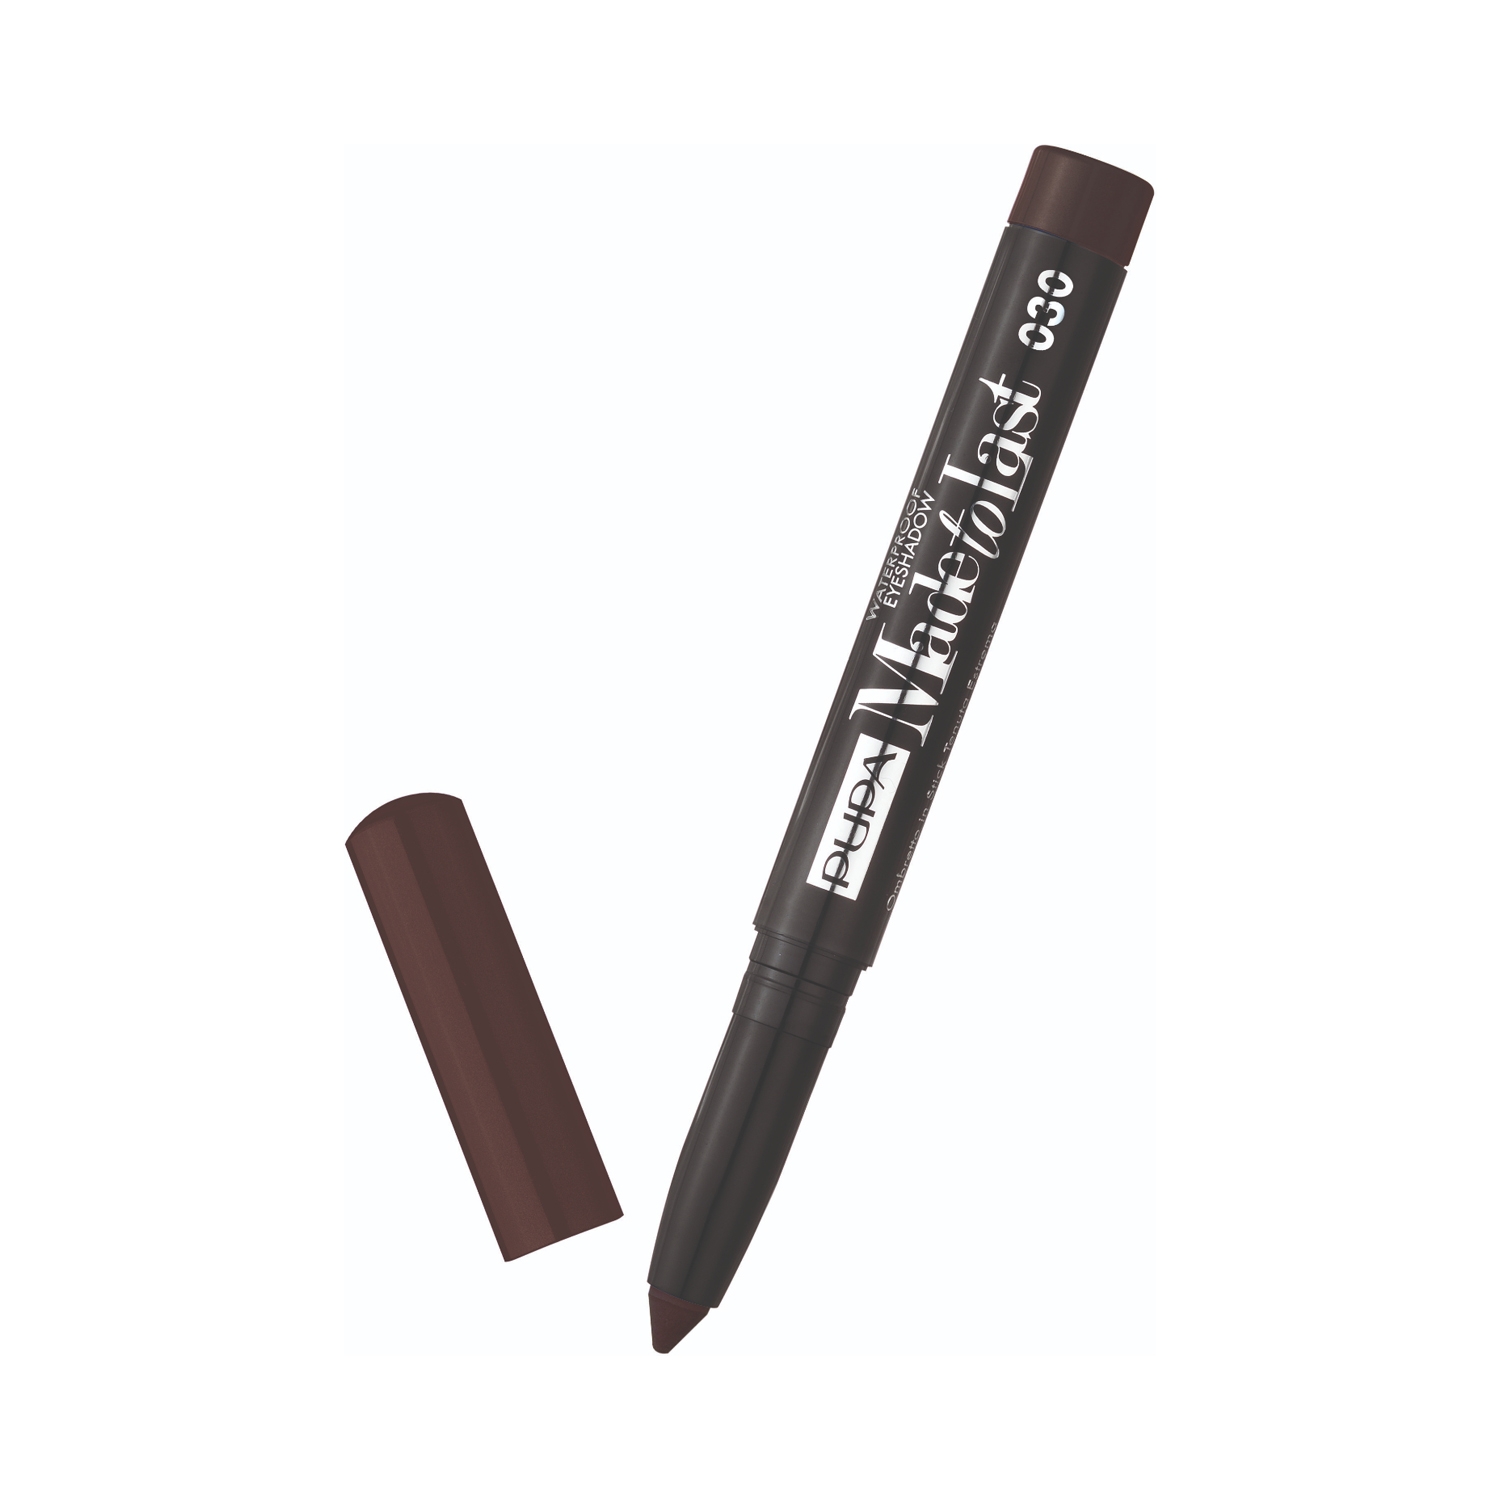 Pupa Milano | Pupa Milano Made To Last Waterproof Long Lasting Stick Eyeshadow - 030 Chocolate (1.4g)